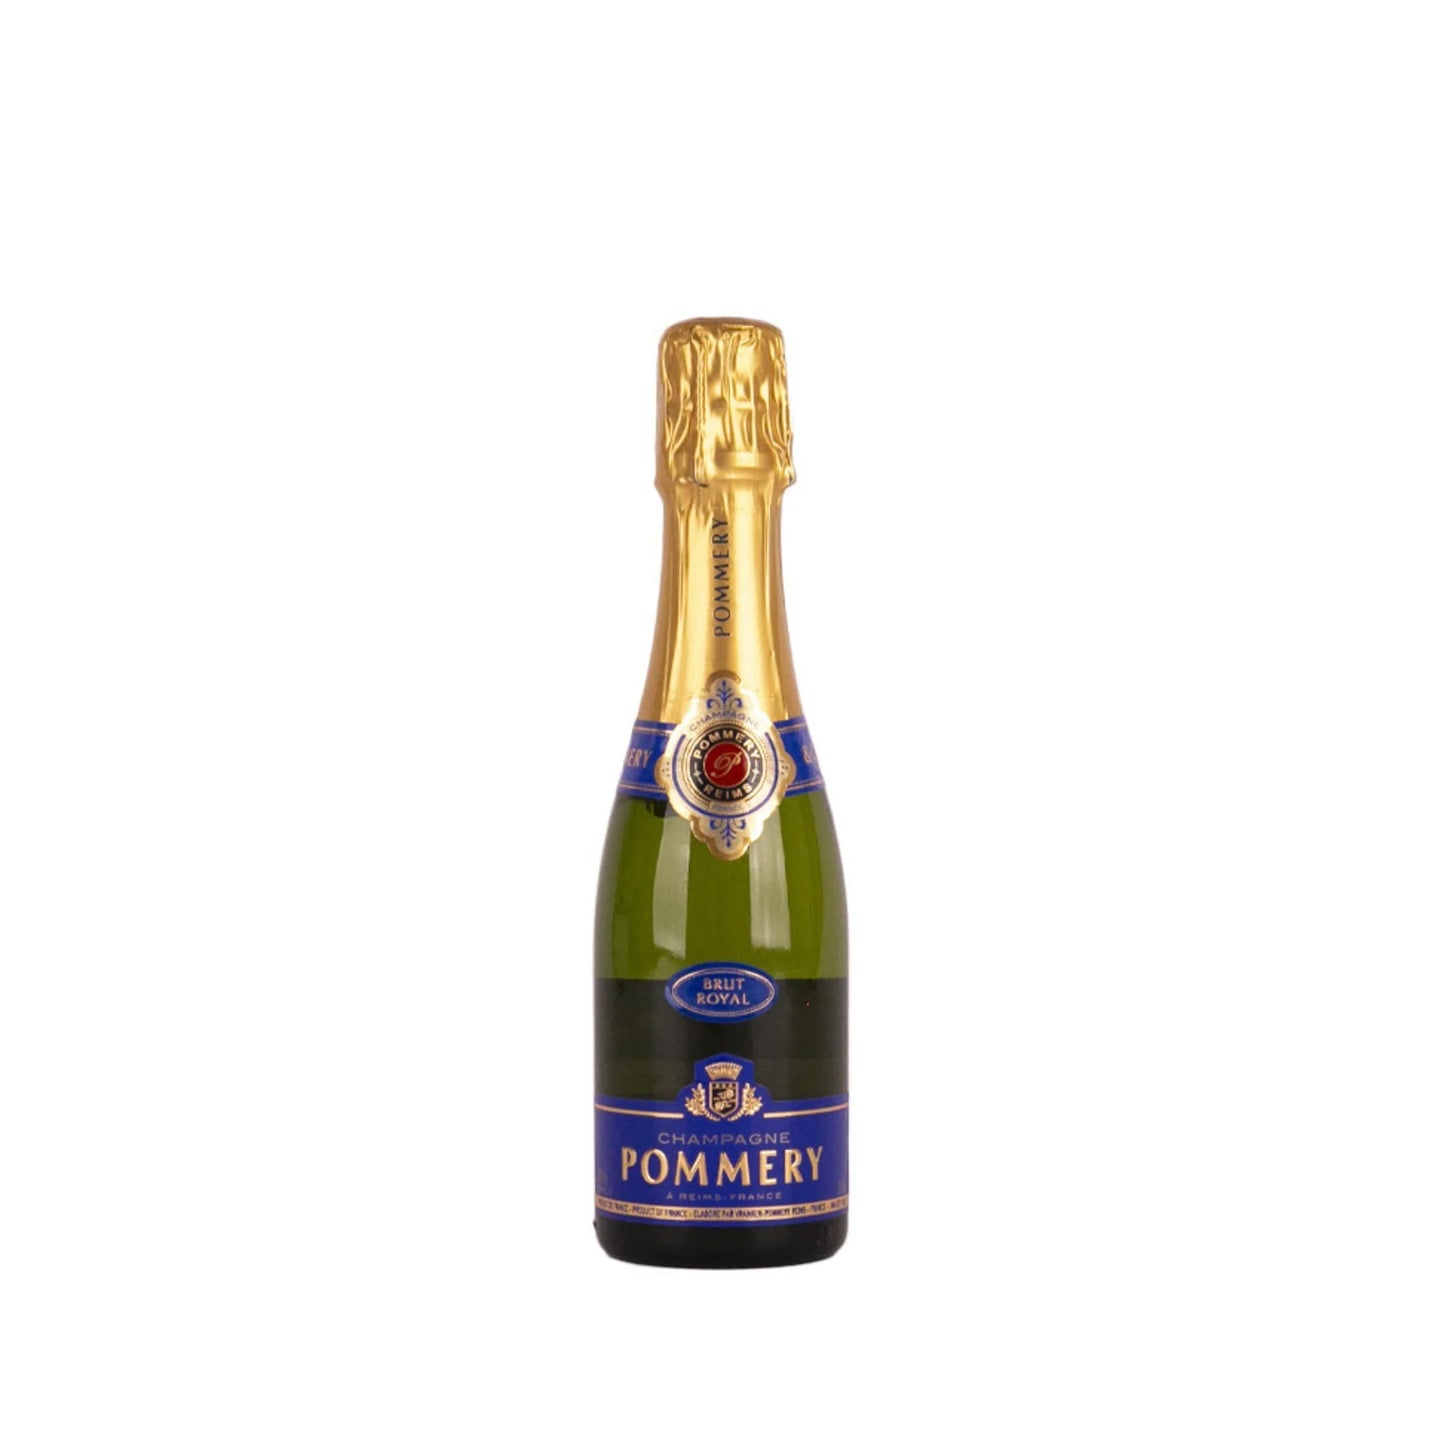 Pommery Brut Royal NV Piccolo Champagne – Emperor Champagne